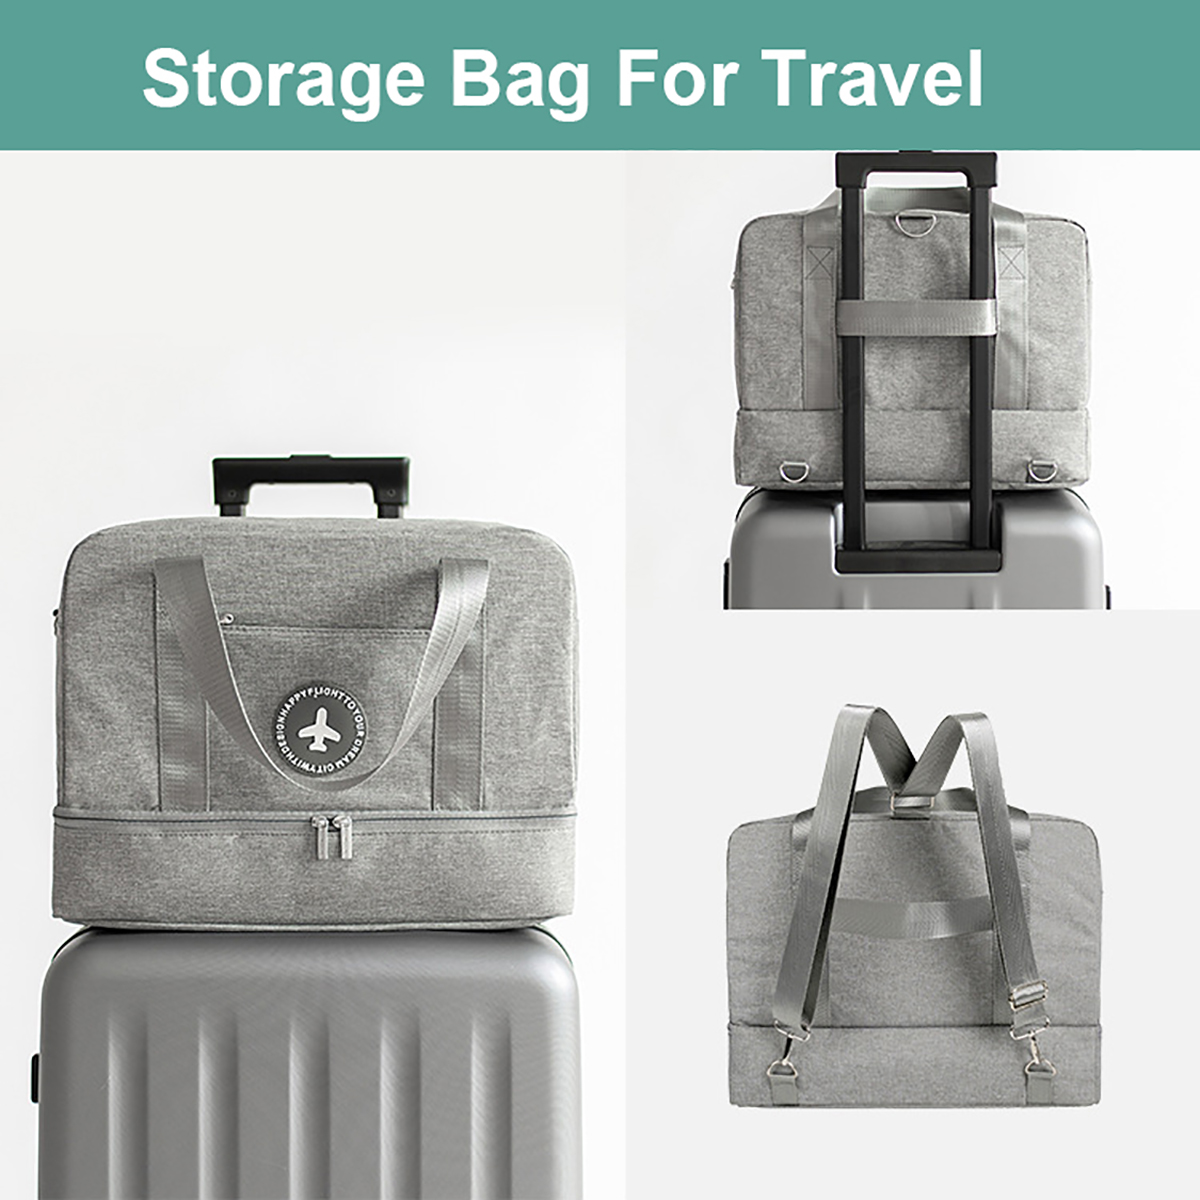 Dry-Wet-Separation-Shoes-Bag--Fitness-Yoga-Bag-Outdoor-Sports-Storage-Bag-Travel-Luggage-Handbag-1609498-4